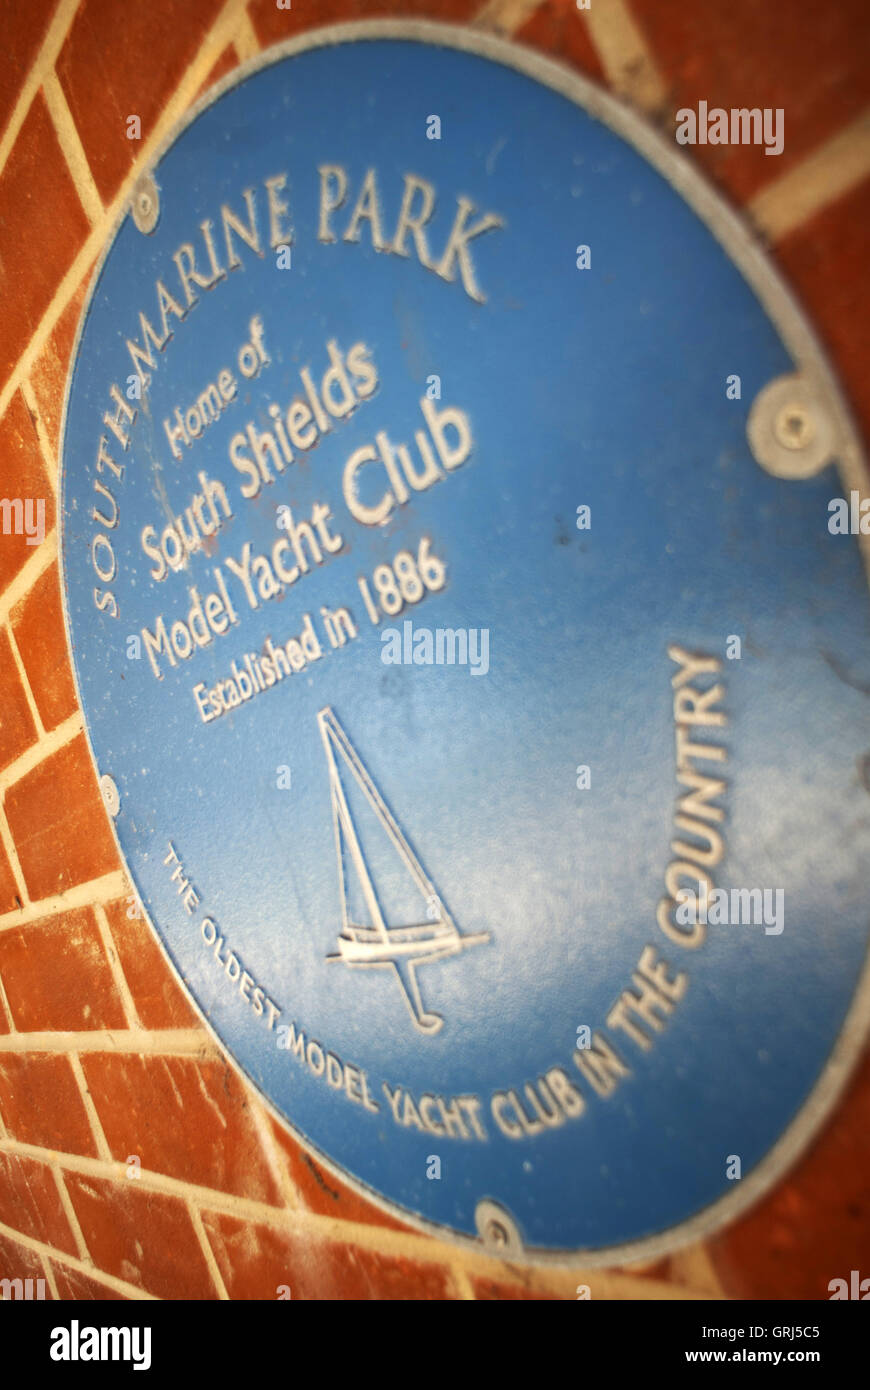 South Shields model yacht club commemorative blue plaque Stock Photo